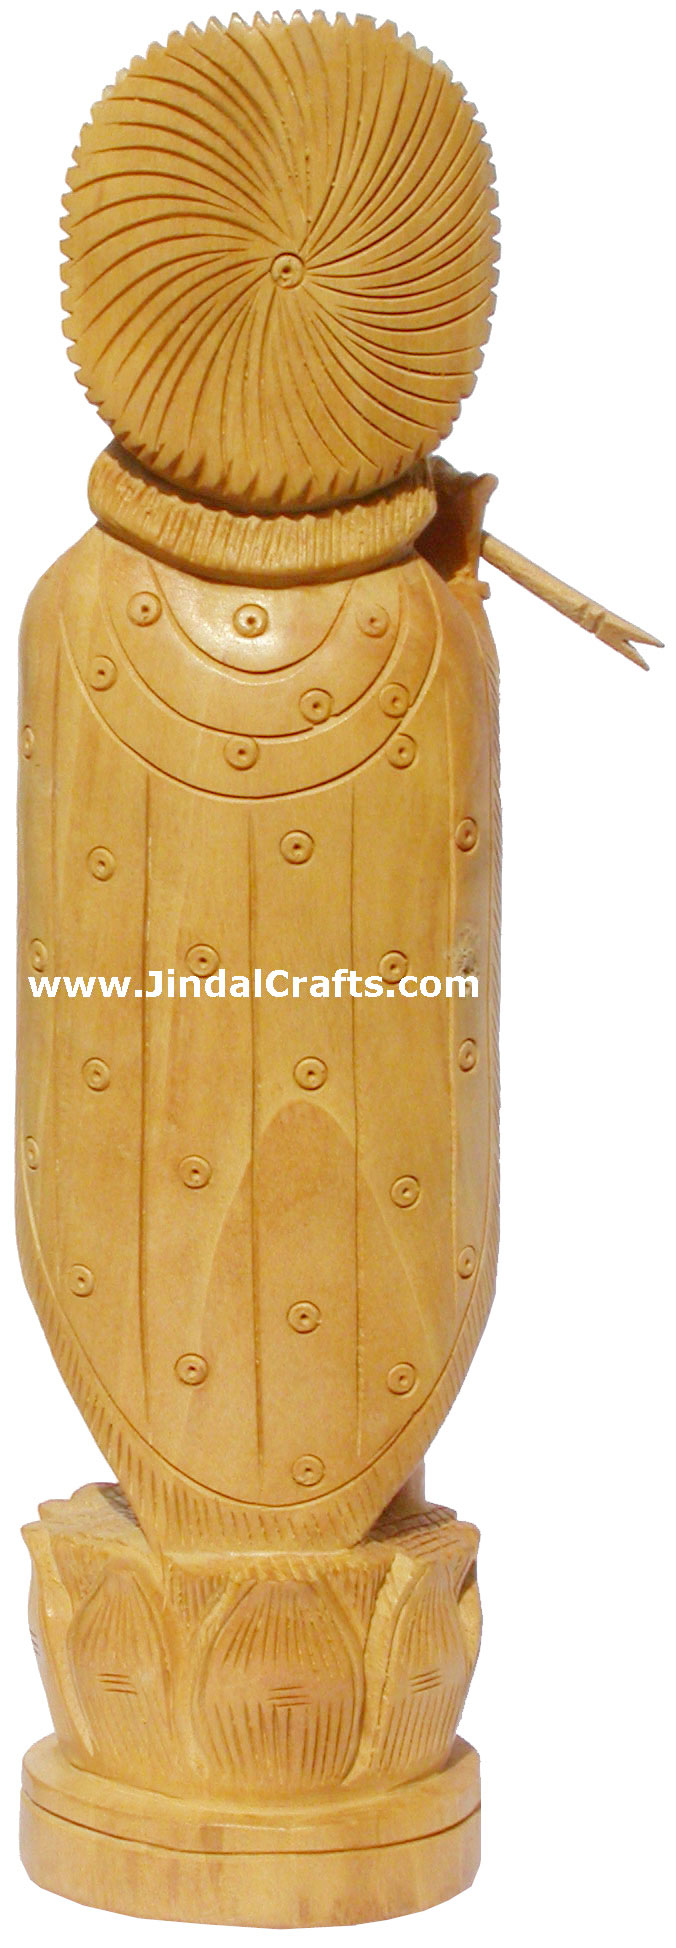 Handmade Wood Sculpture Lord Krishna Hindu Religious Art India God Idols Statues